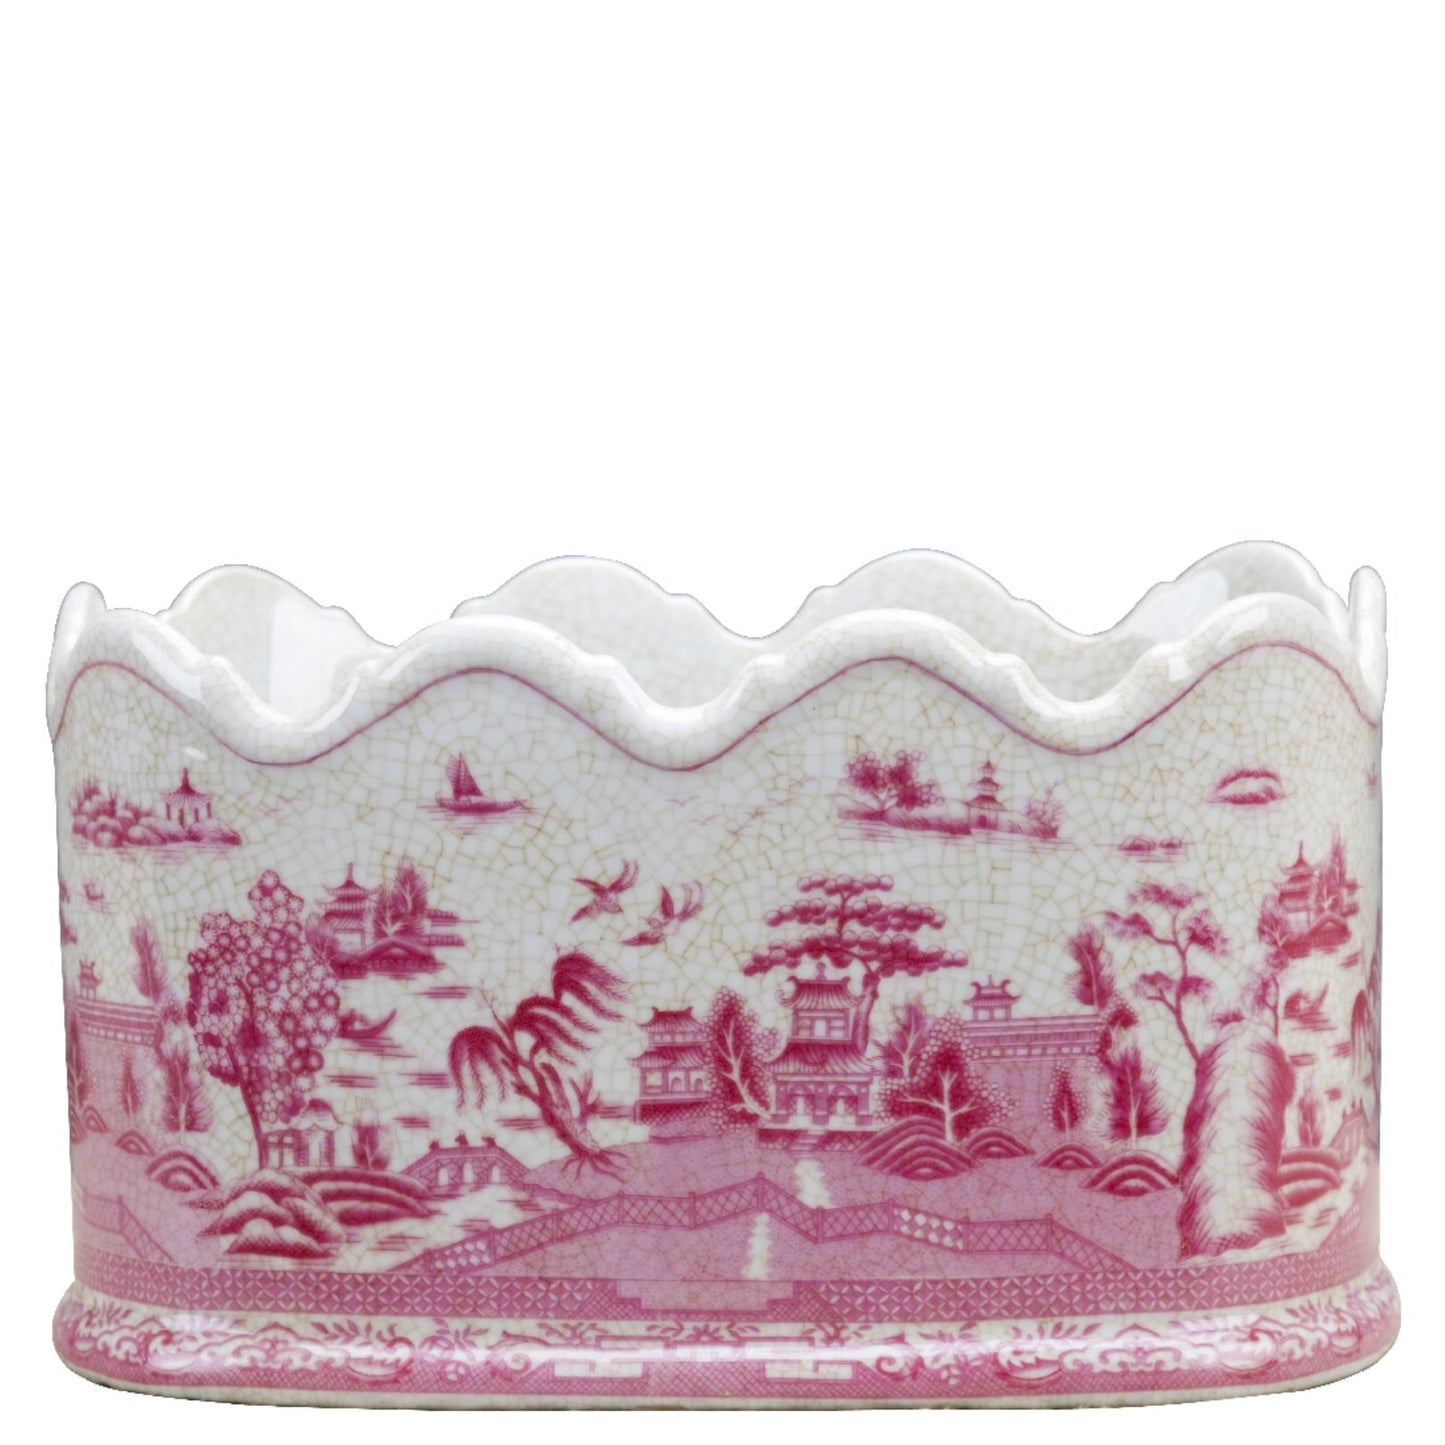 STUNNING- Pink & White Porcelain Pagoda Scalloped Basin, 12x8x7 - Pristine!